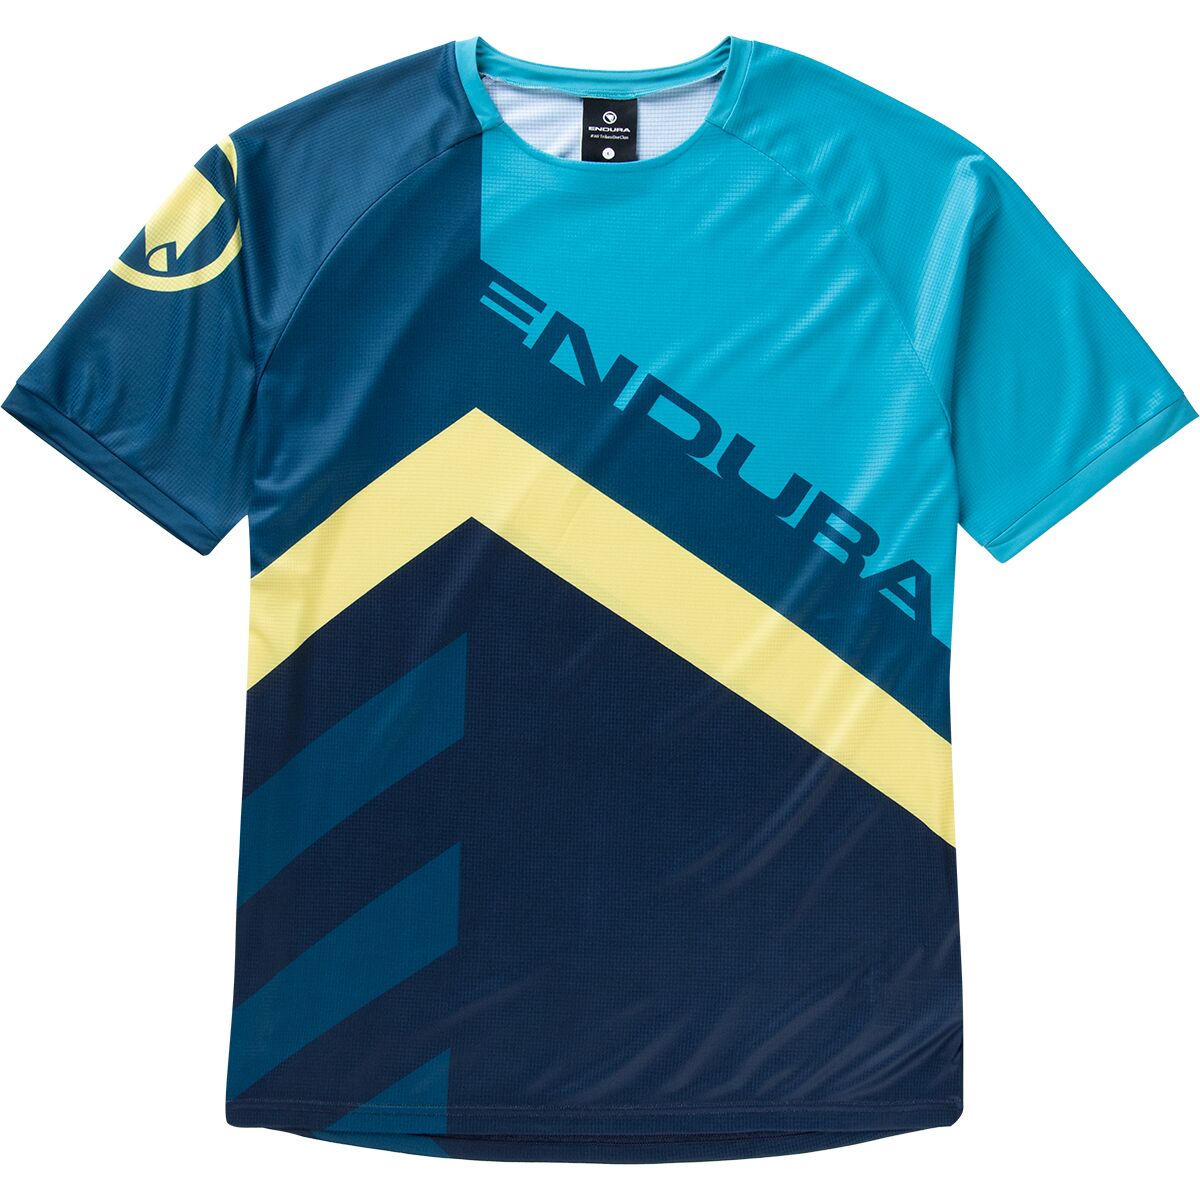 Endura SingleTrack Print T-Shirt LTD - Men's Blueberry, S